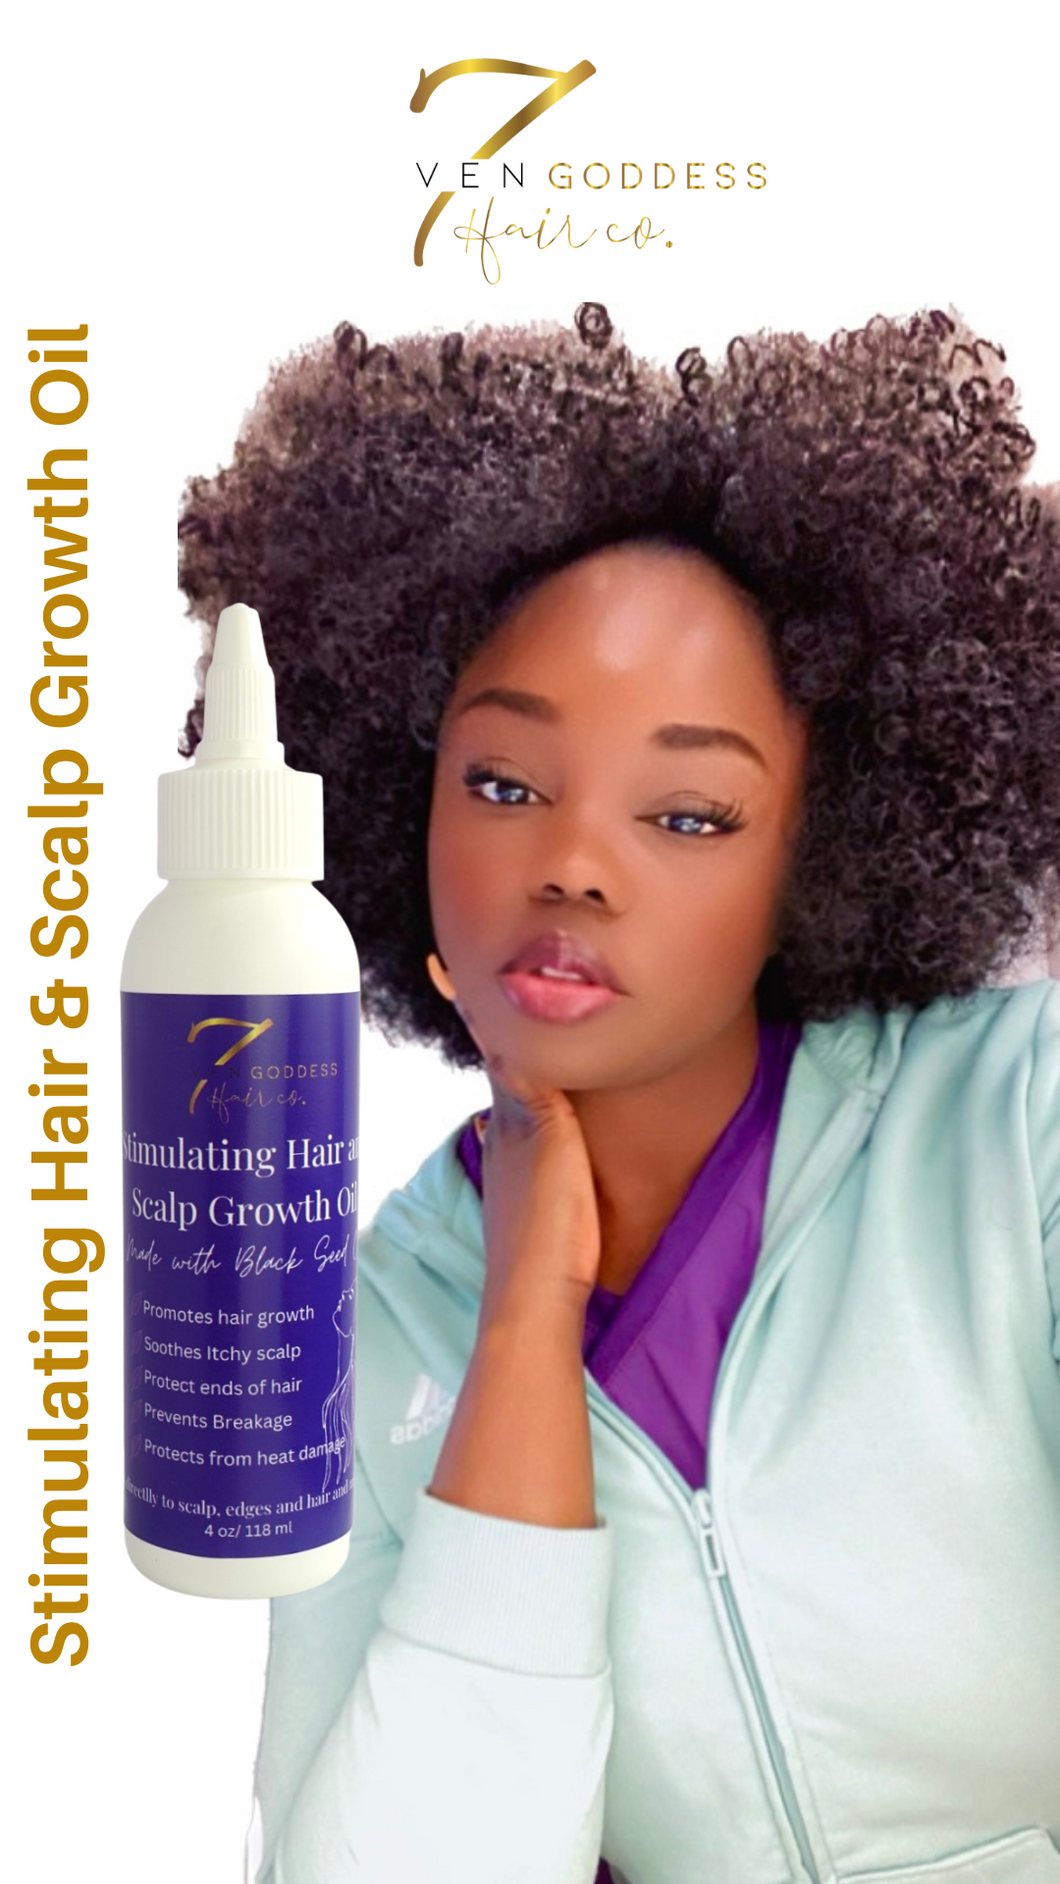 Stimulating Hair & Scalp Growth Oil